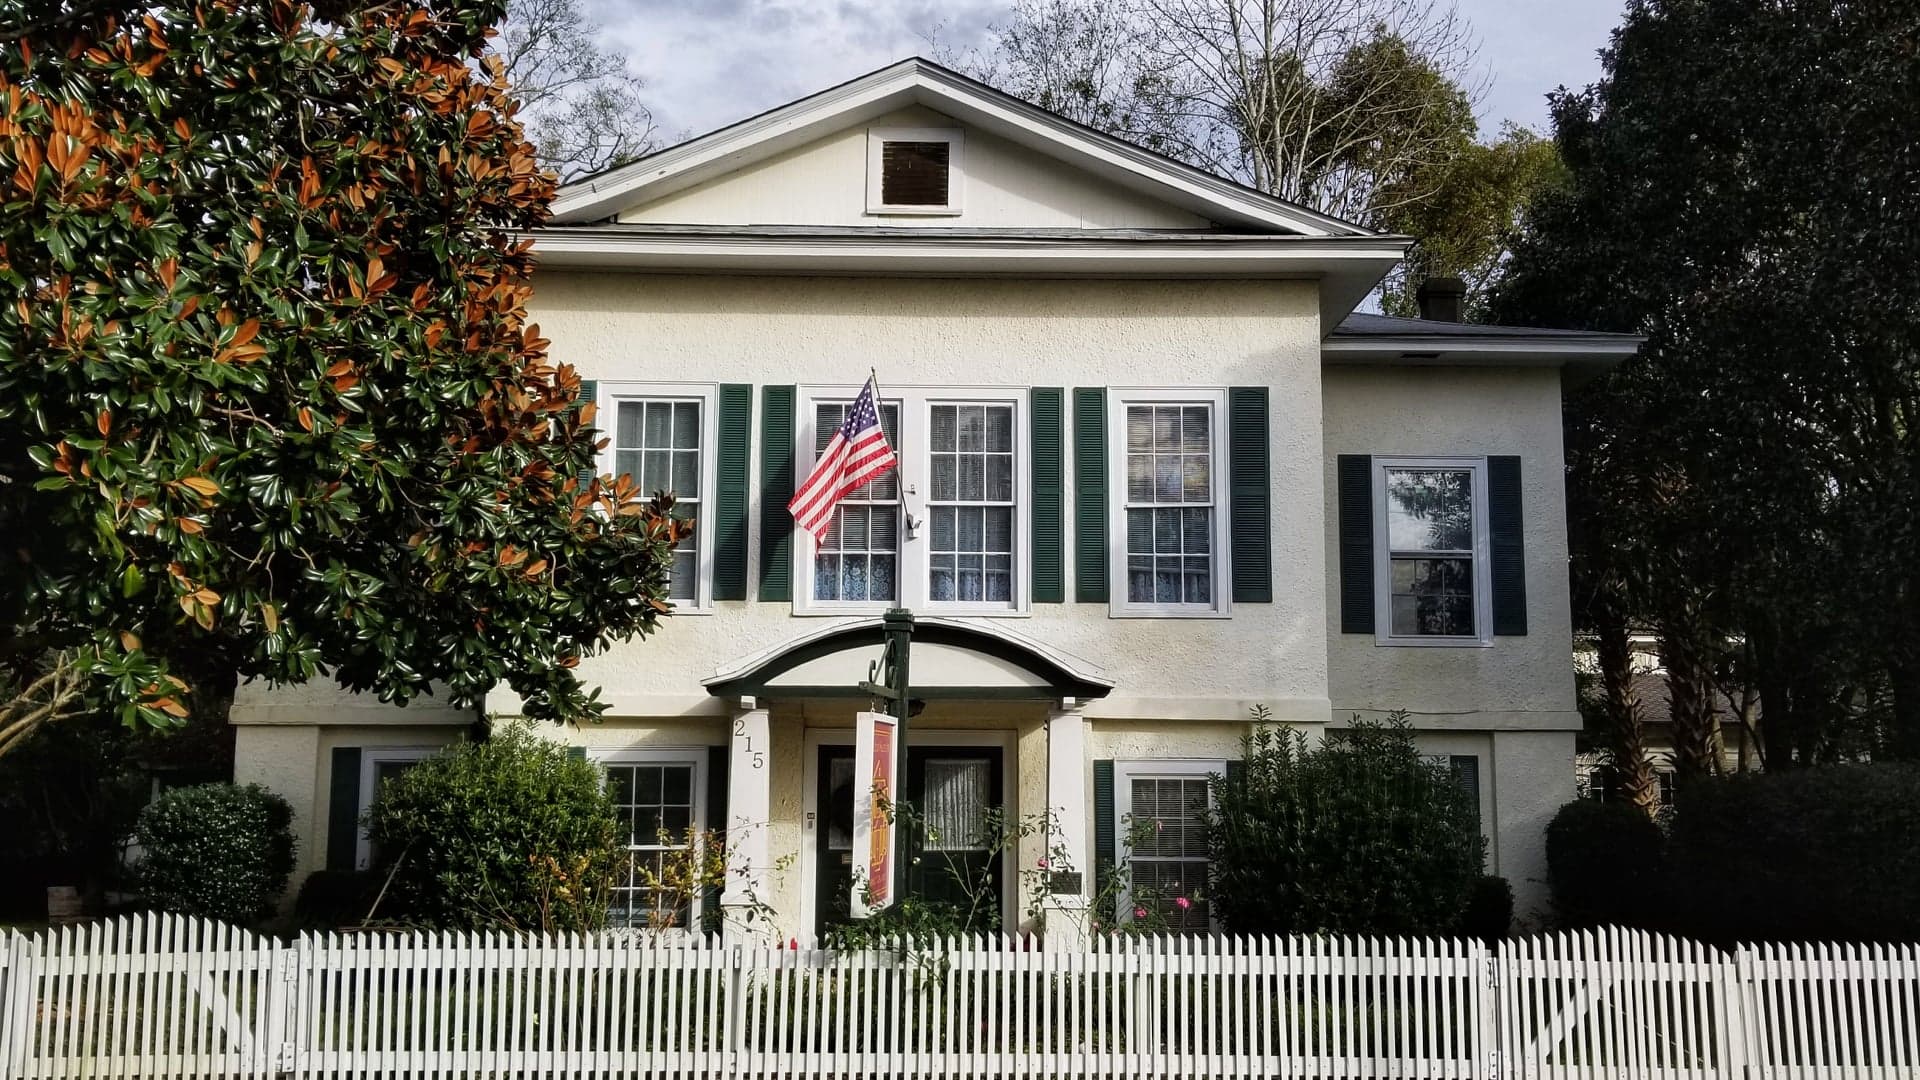 Allison House Inn, 1843: A Glimpse into Tallahassee’s Historic Charm